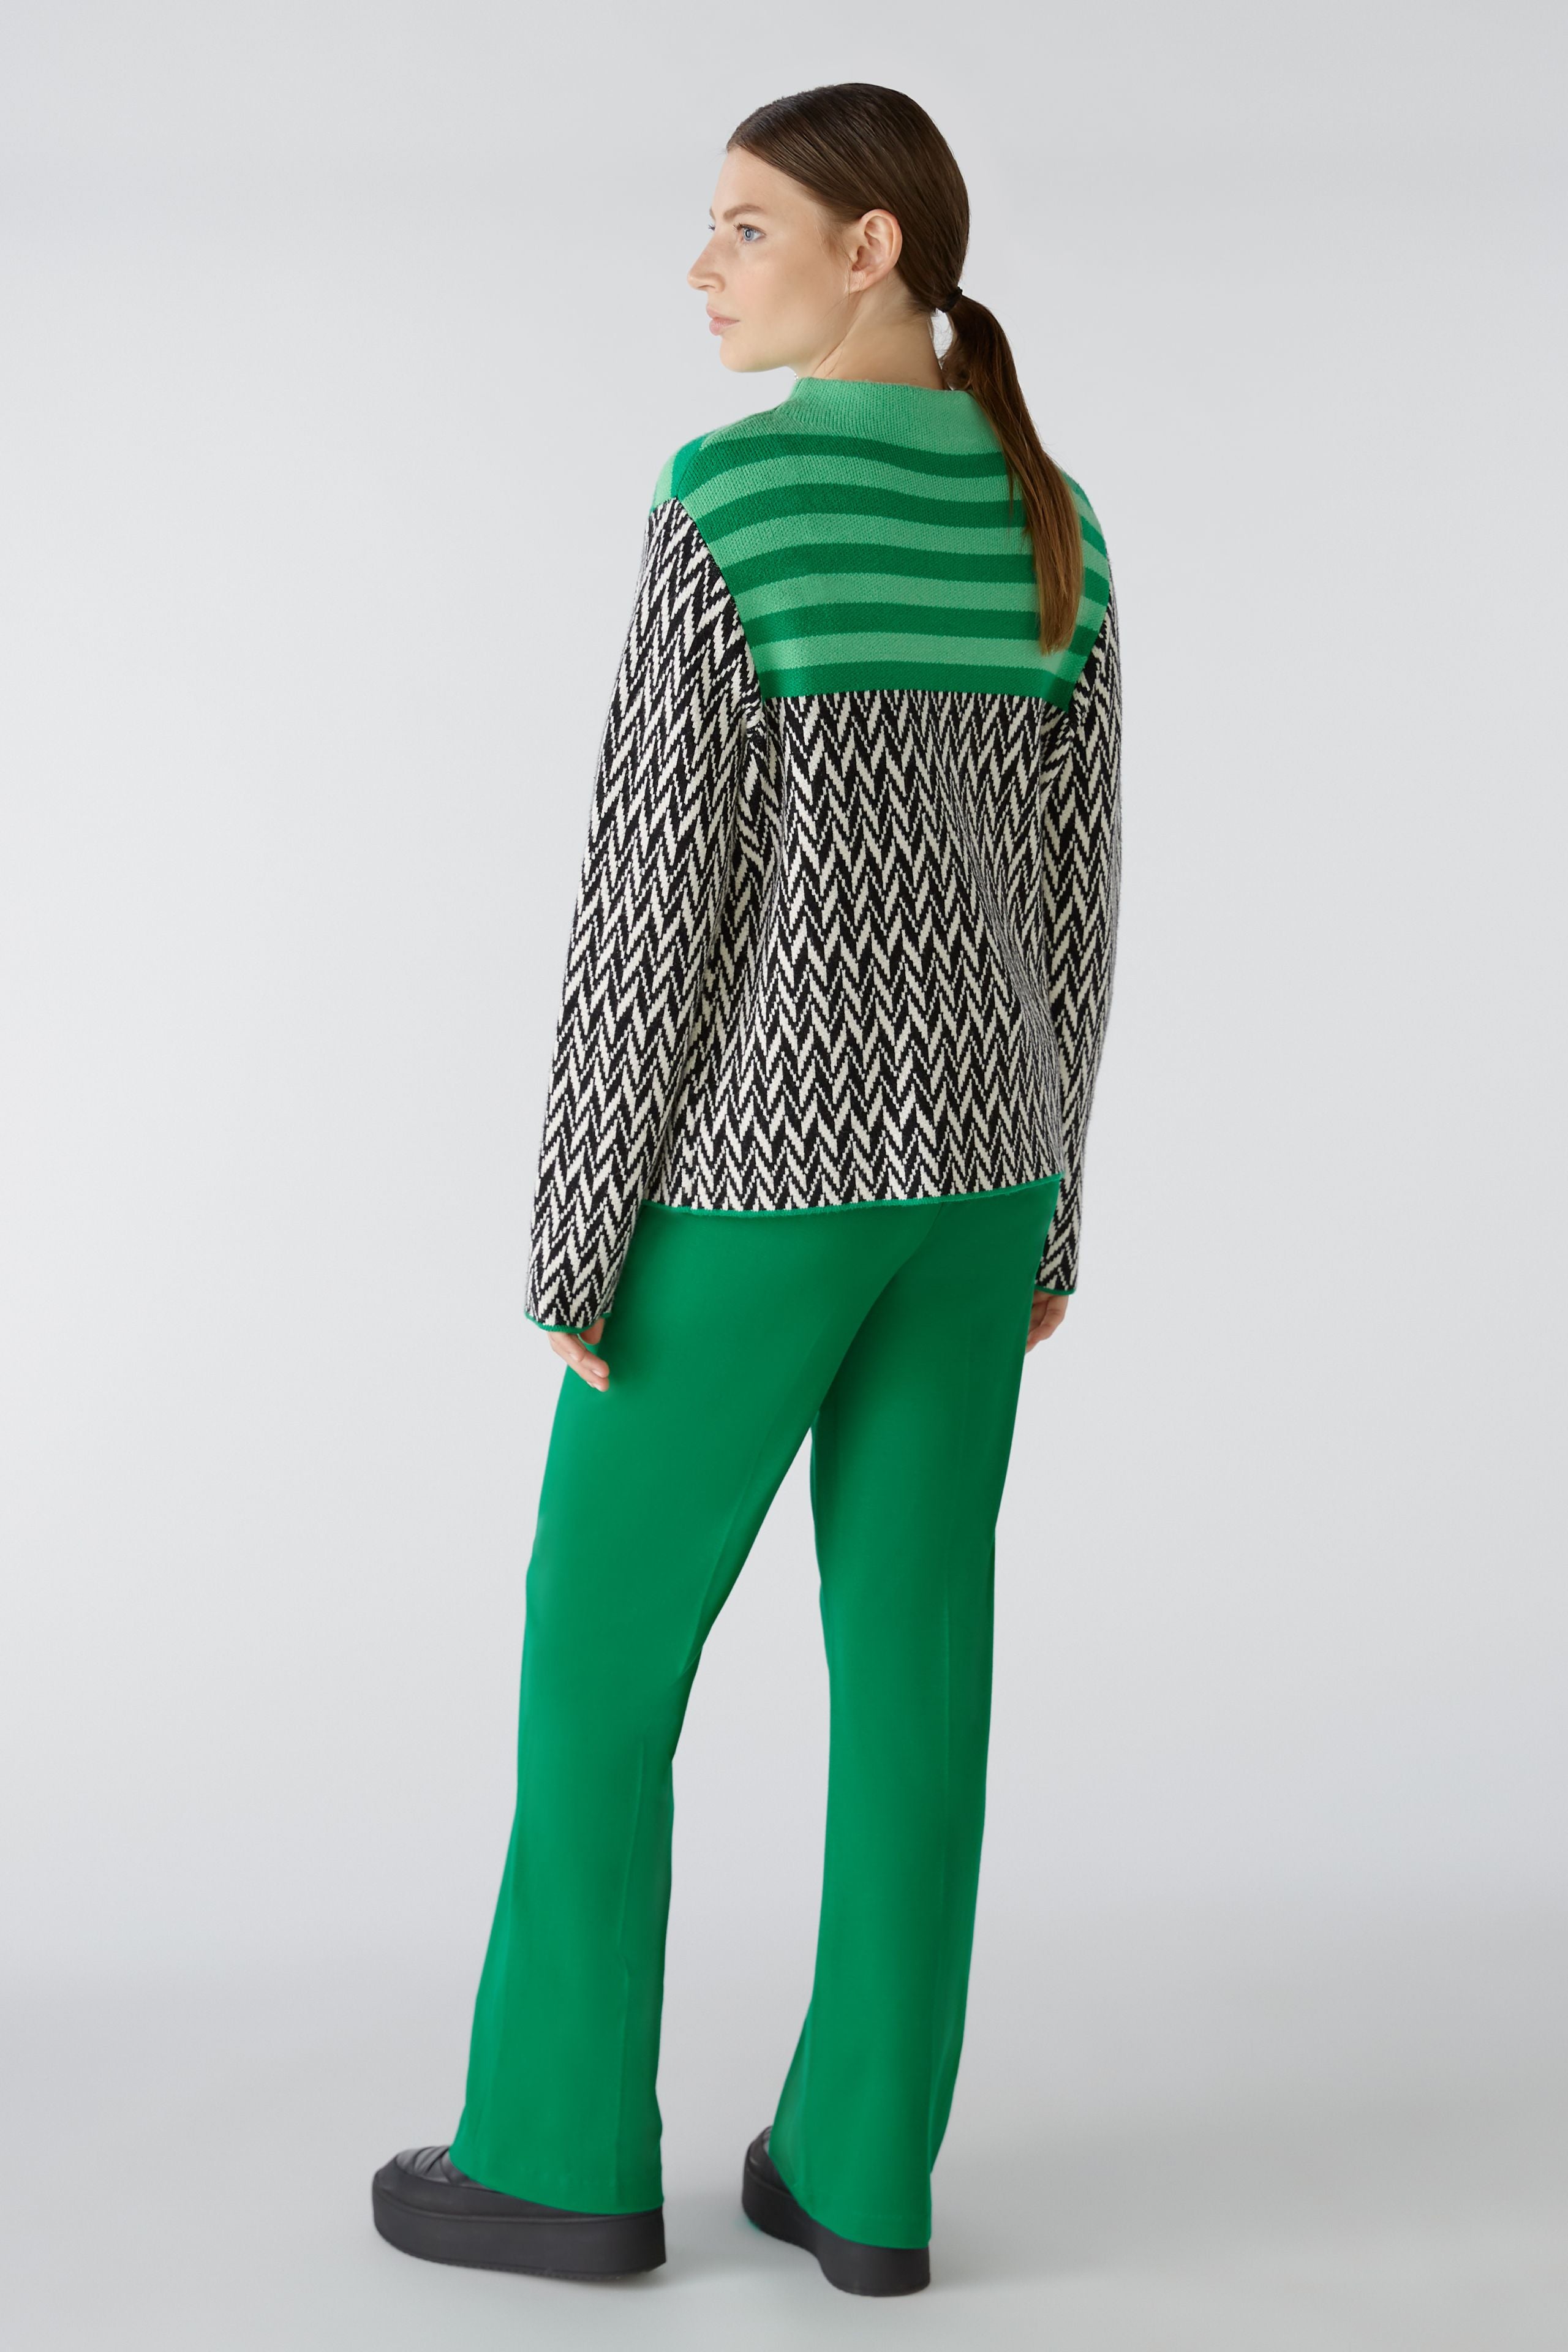 Contrast Print Knit in Green/Black